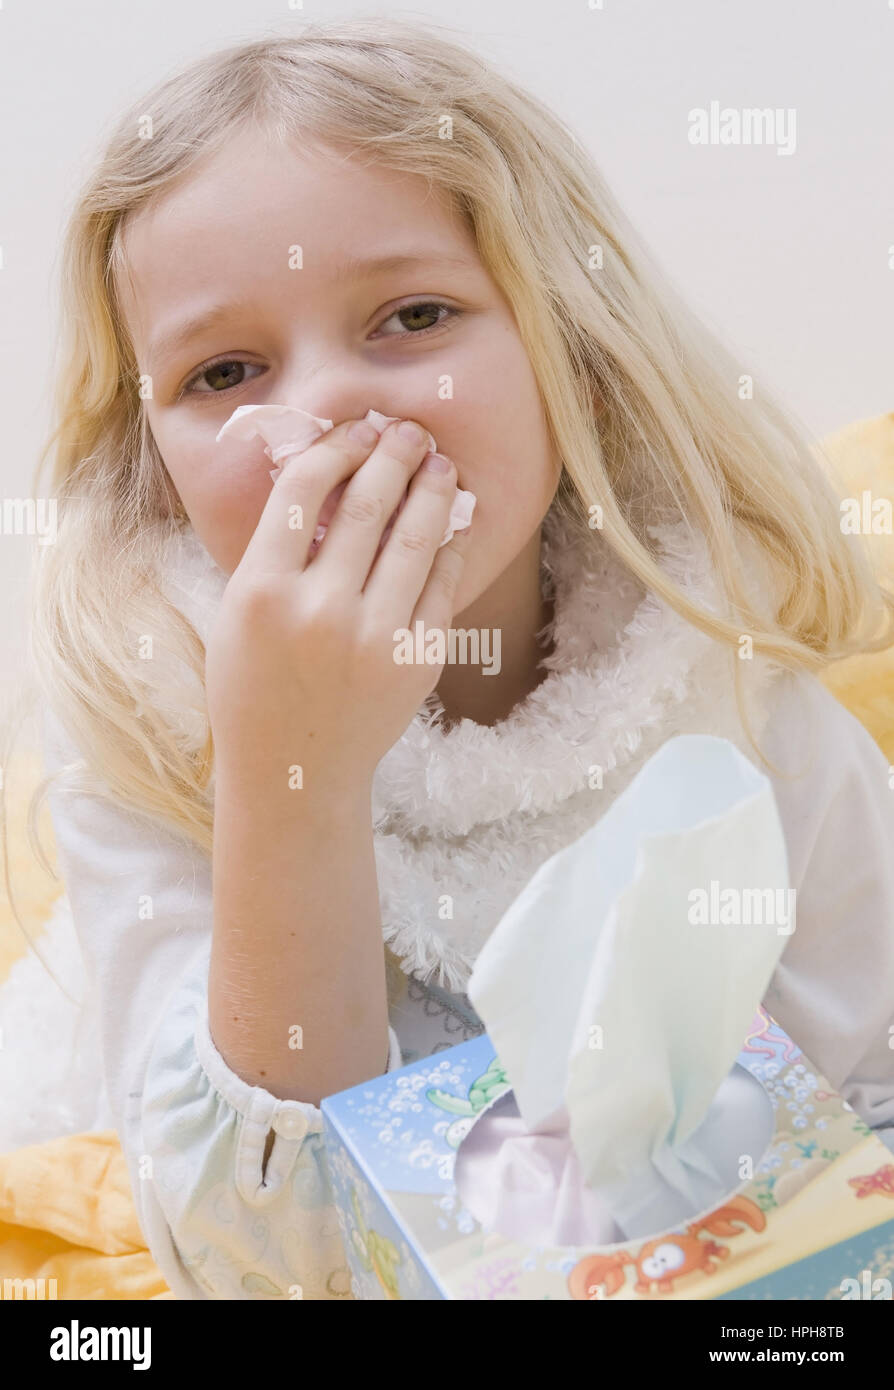 Maedchen mit Erkaeltung im Bett - sick girl in bed, Model released Stock Photo